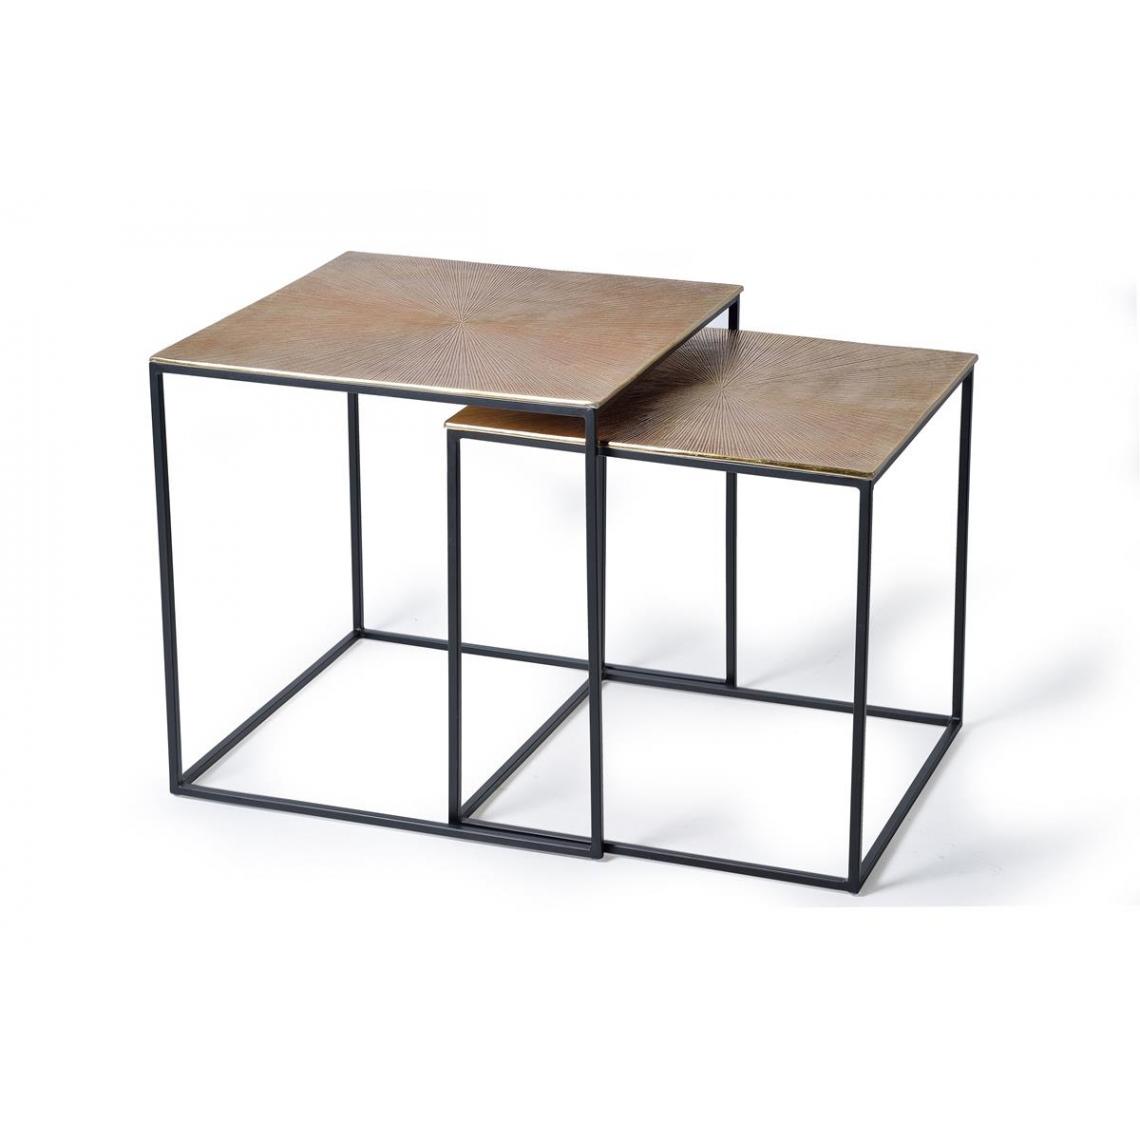 Pegane - Set de 2 tables basses en fer coloris bronze - Tables basses